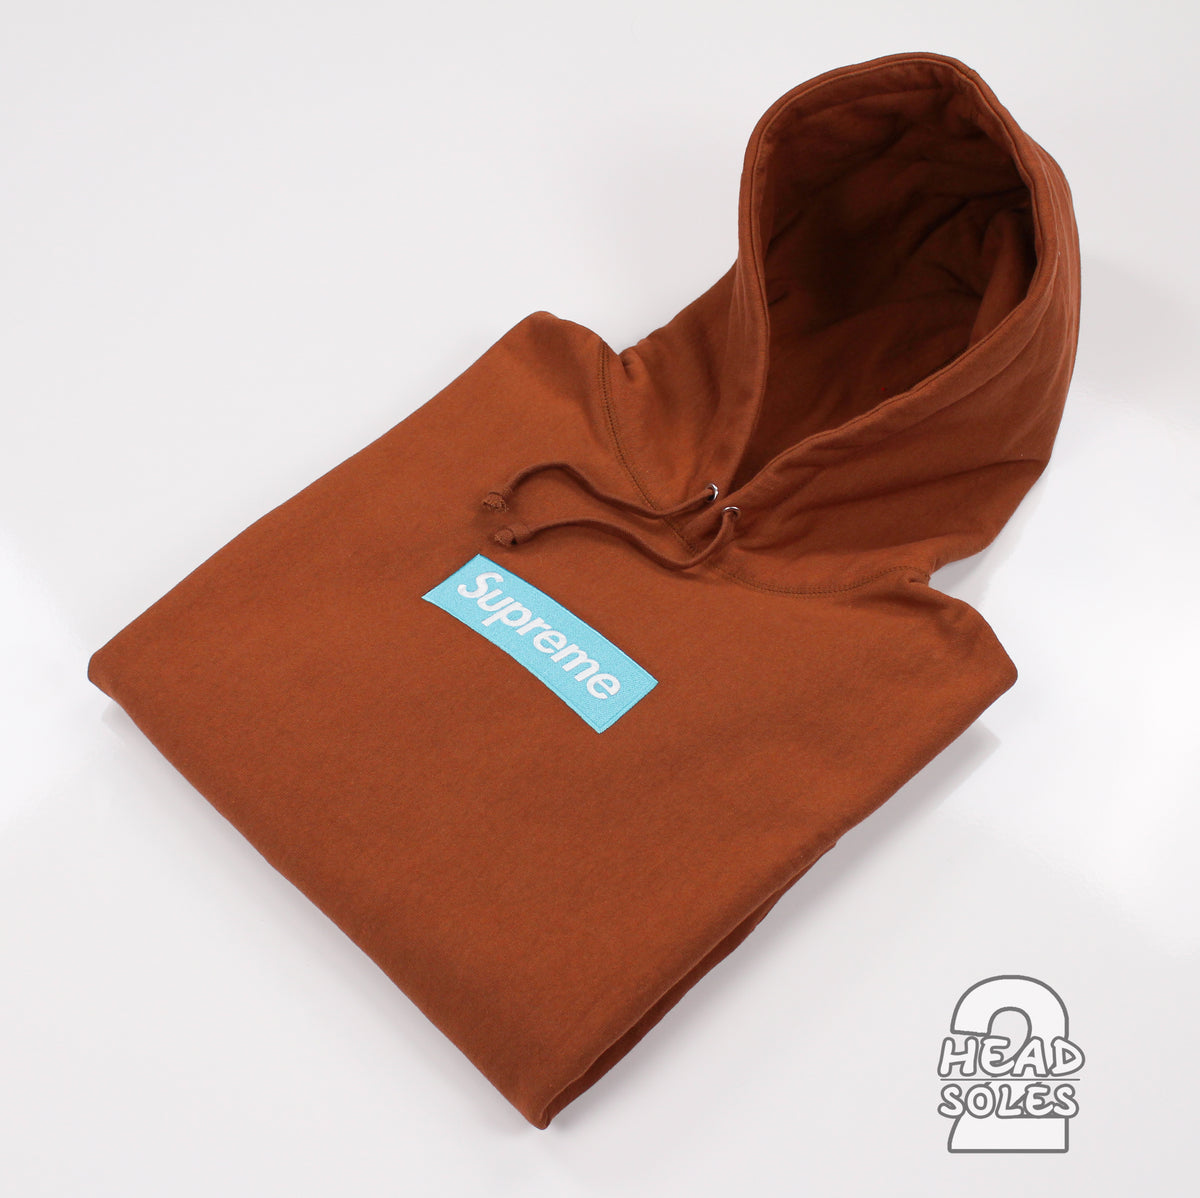 Supreme FW17 box logo hooded sweatshirt in Rust color - Medium